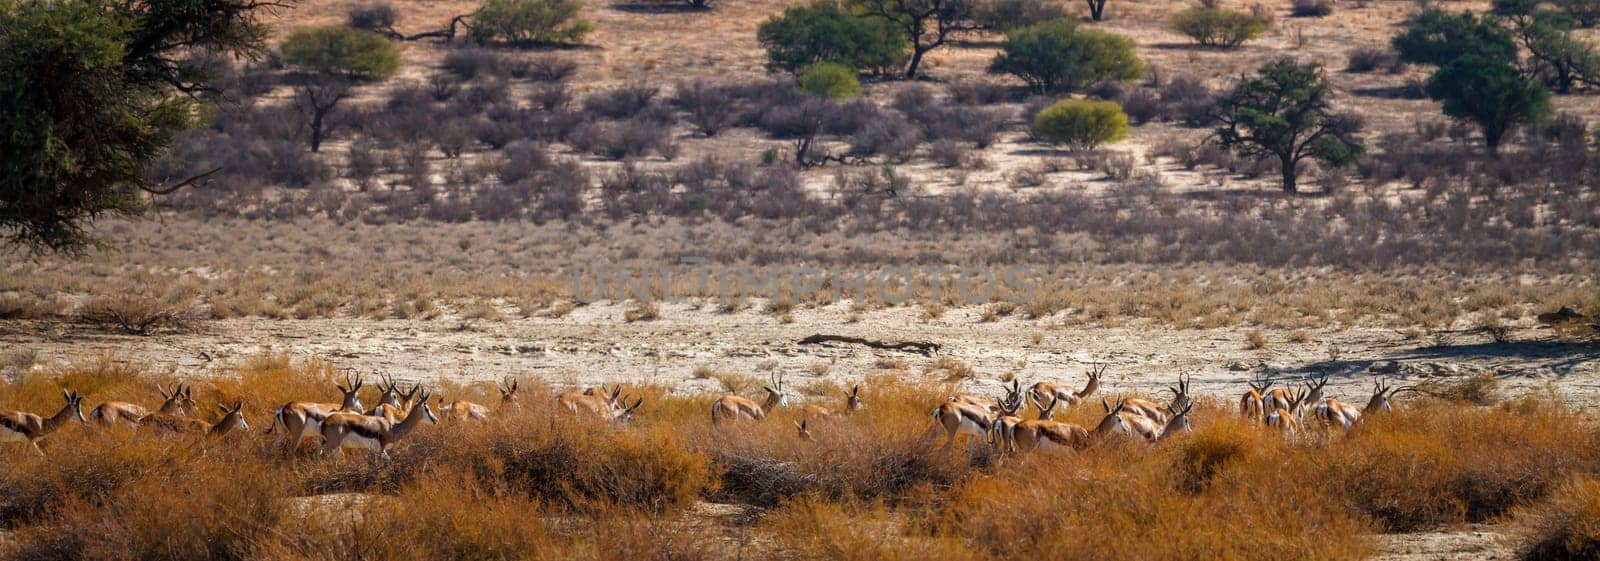 Springbok in Kgalagadi transfrontier park, South Africa by PACOCOMO